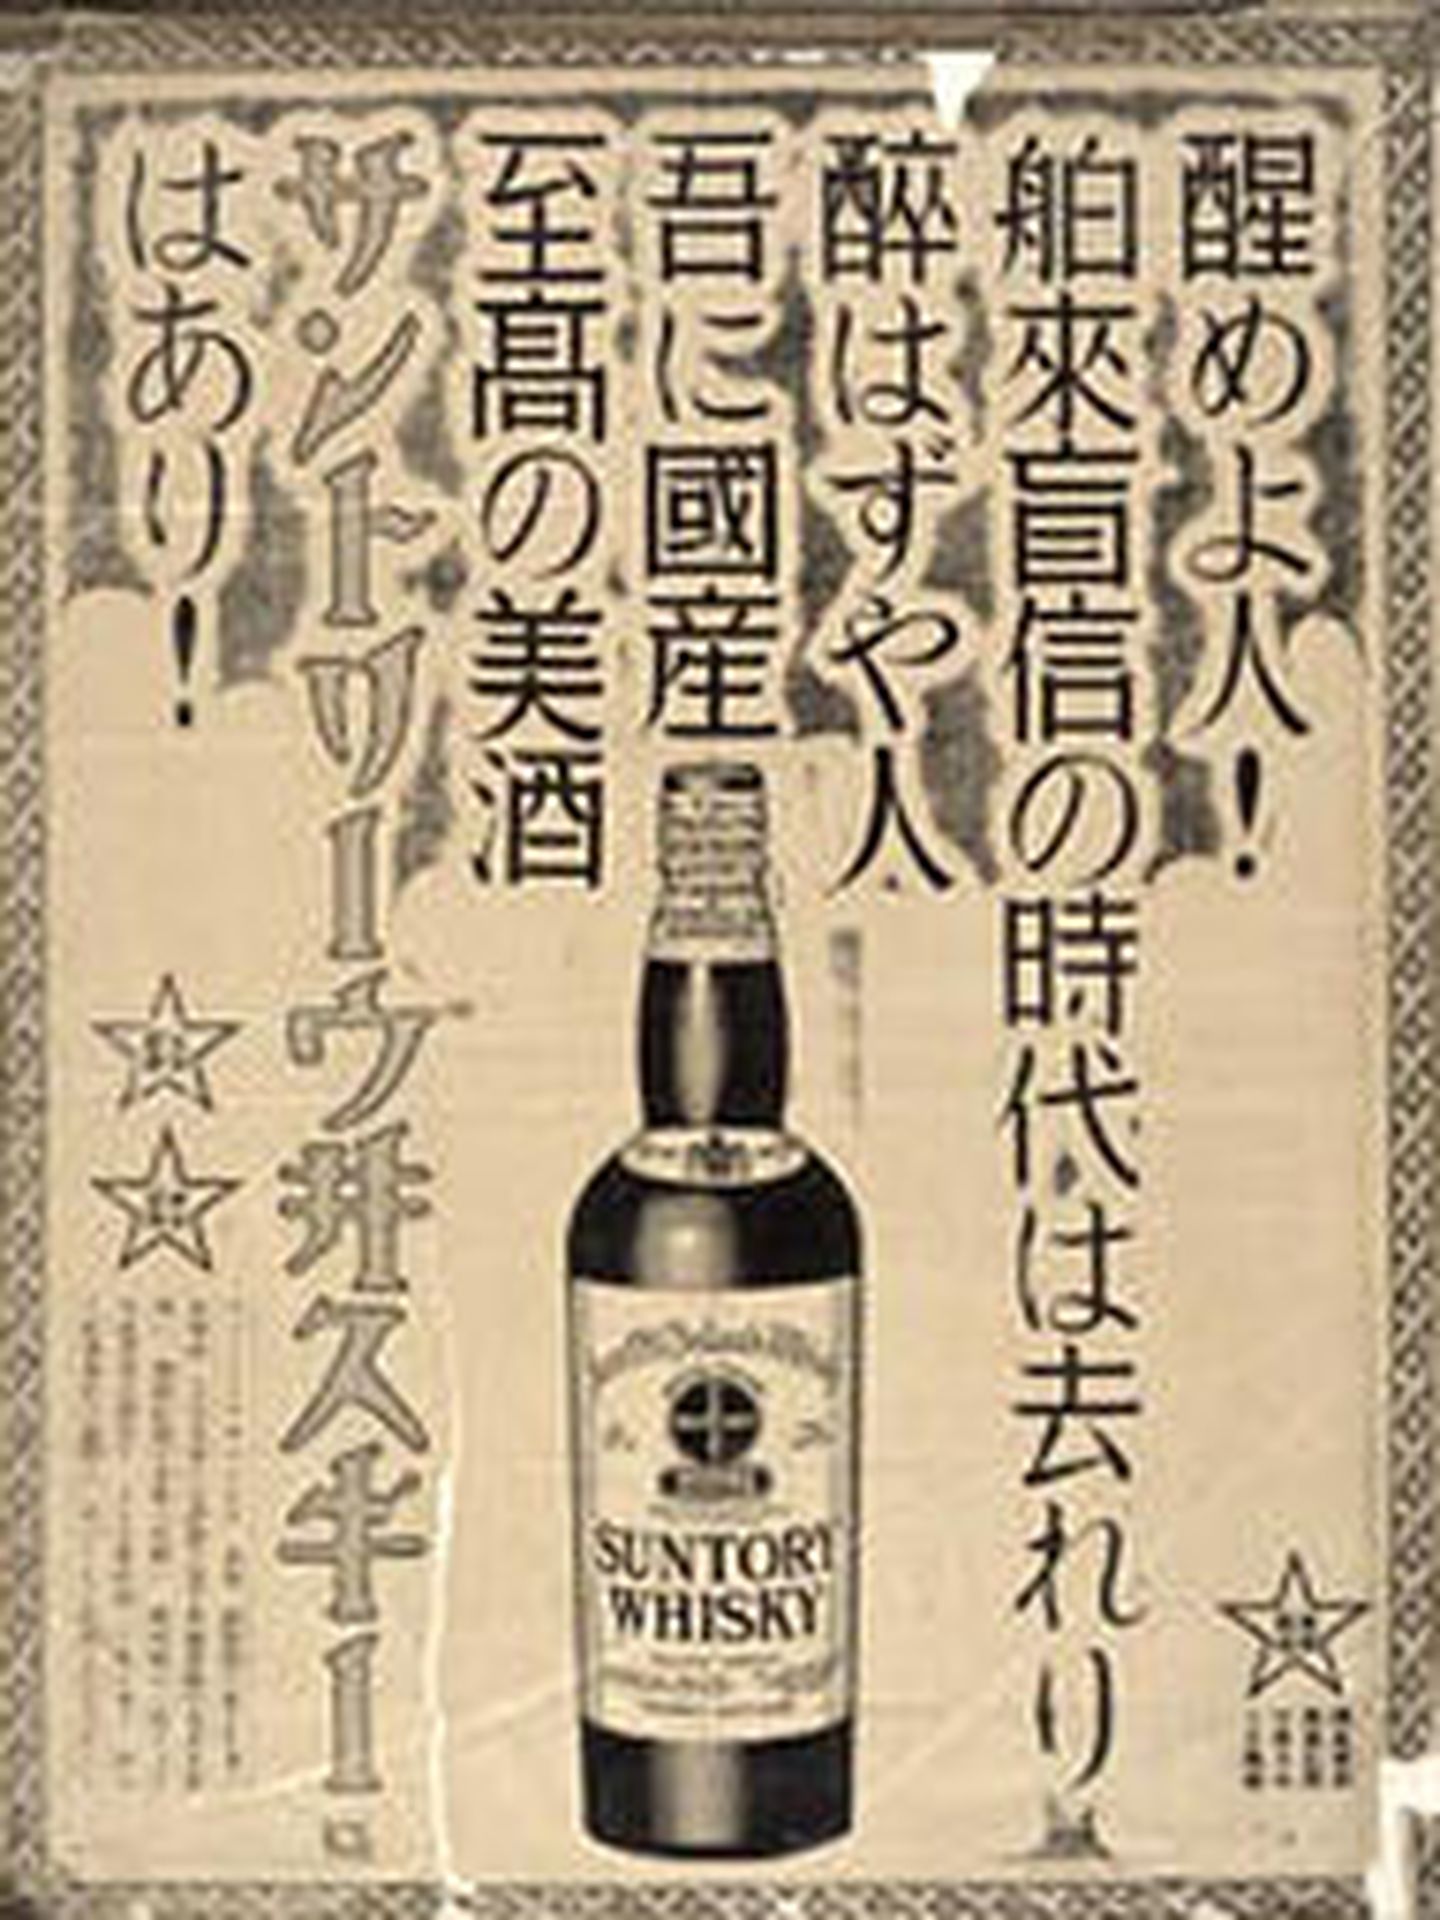 Suntory, el primer whisky japonés.